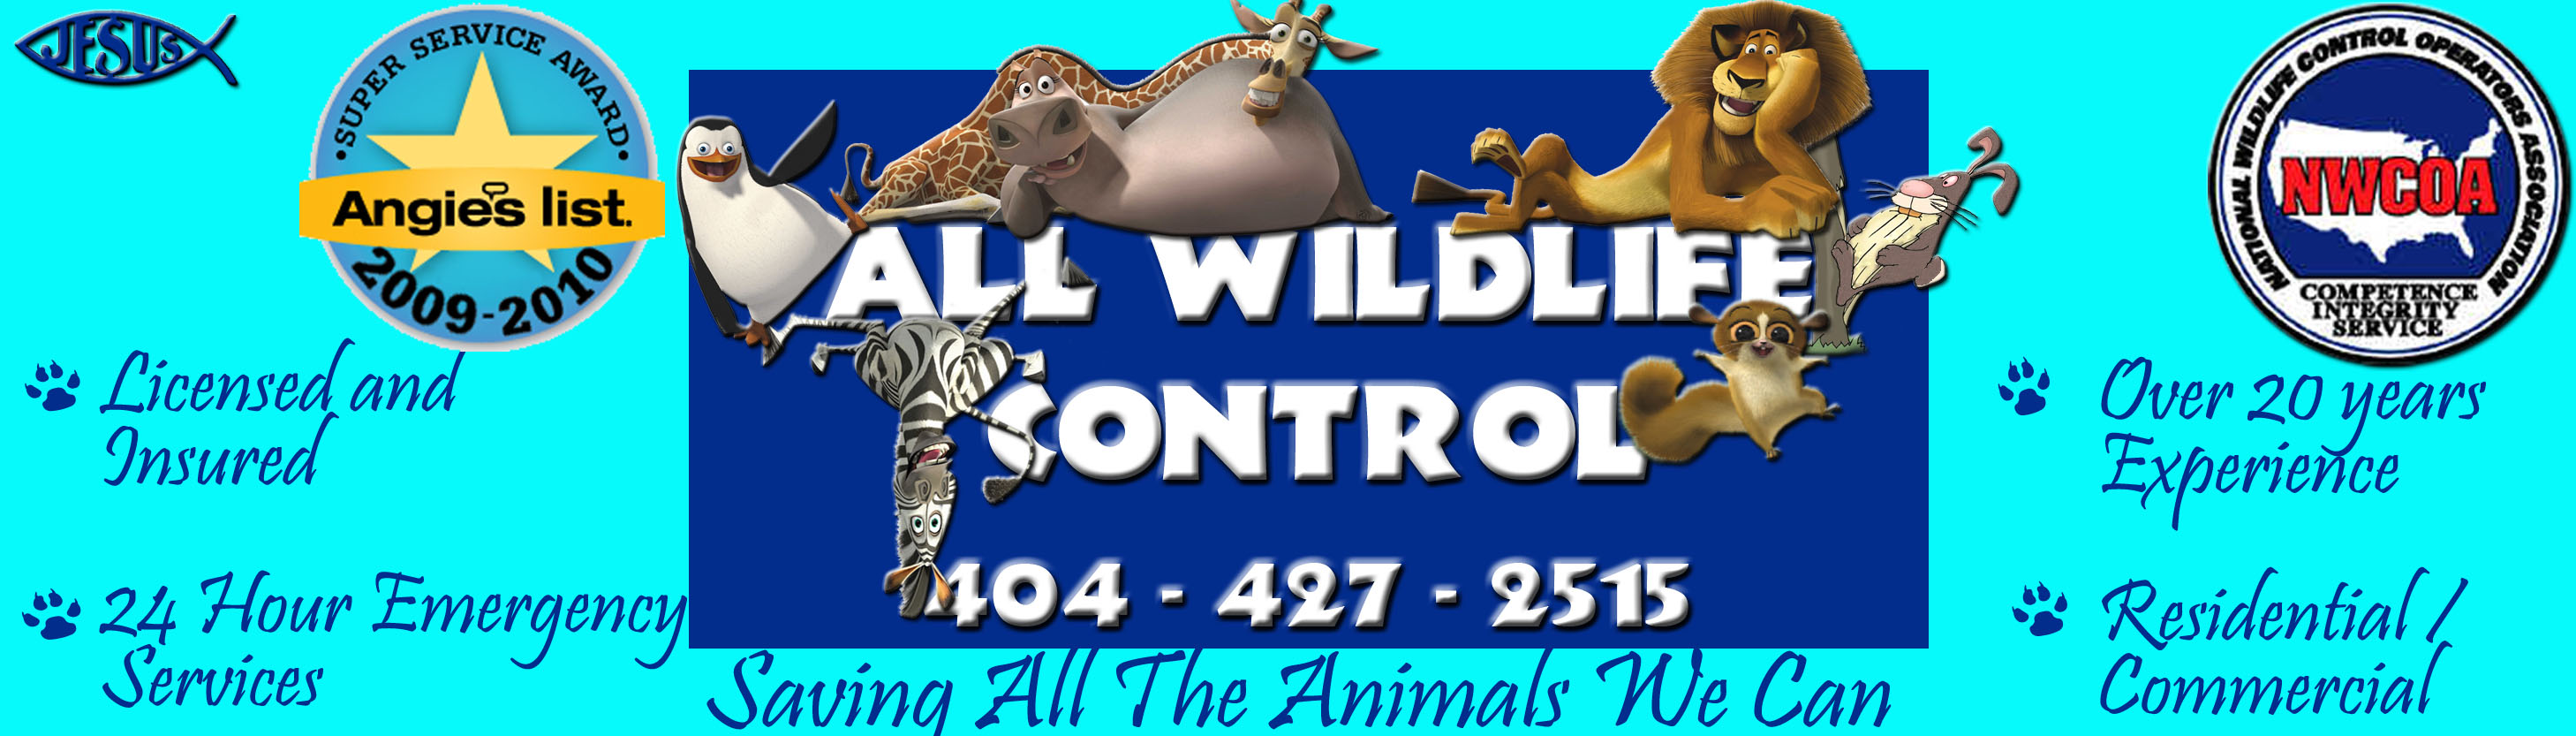 All Wildlife Control